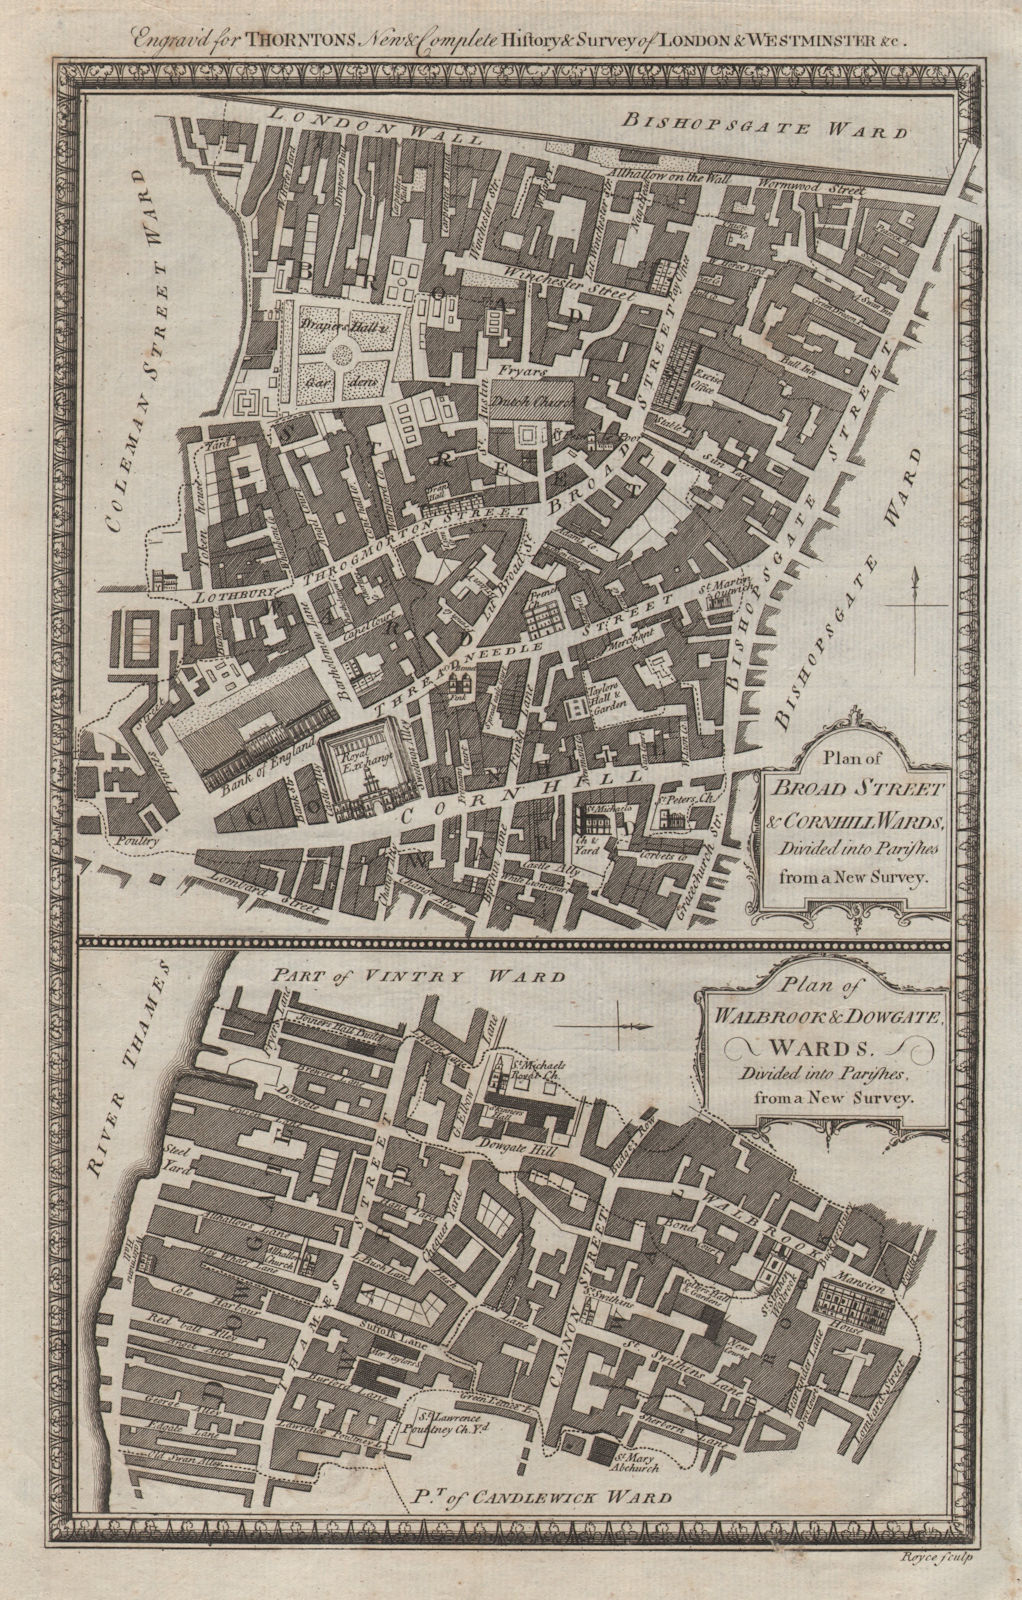 Associate Product Broad Street Cornhill Walbrook Dowgate Wards. City of London. THORNTON 1784 map